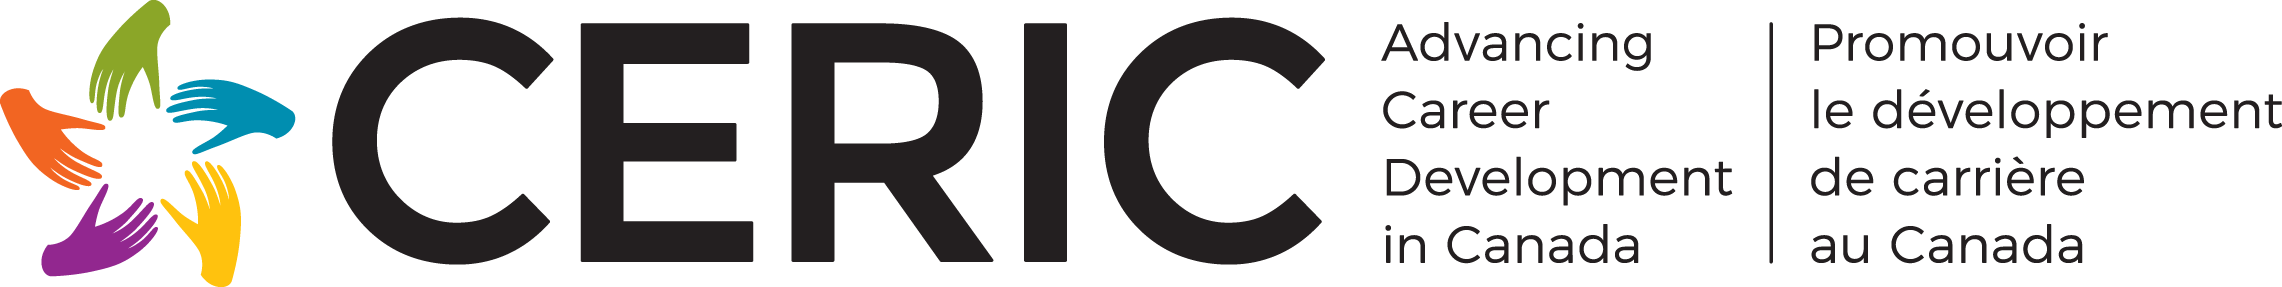 CERIC logo